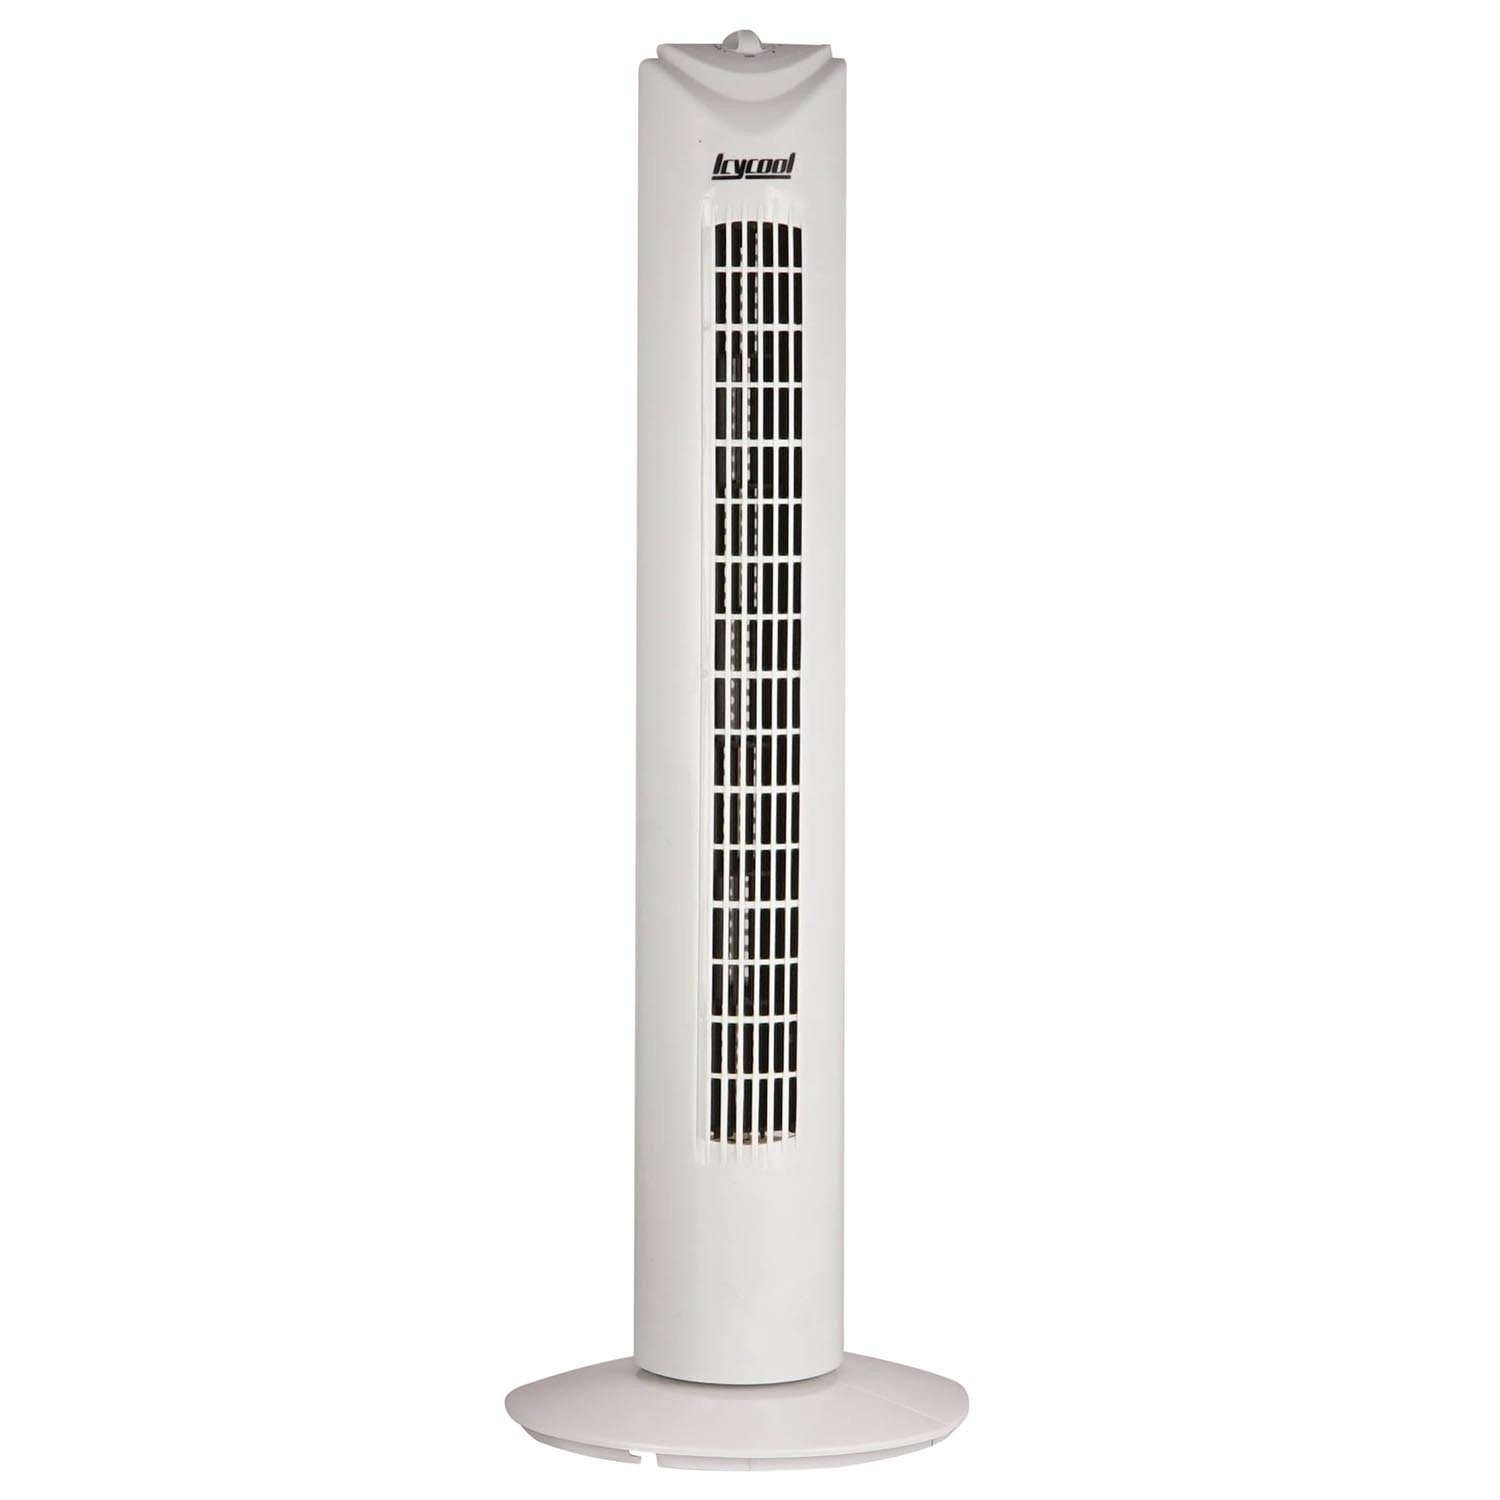 Icycool Oscillating Tower Fan Image 1